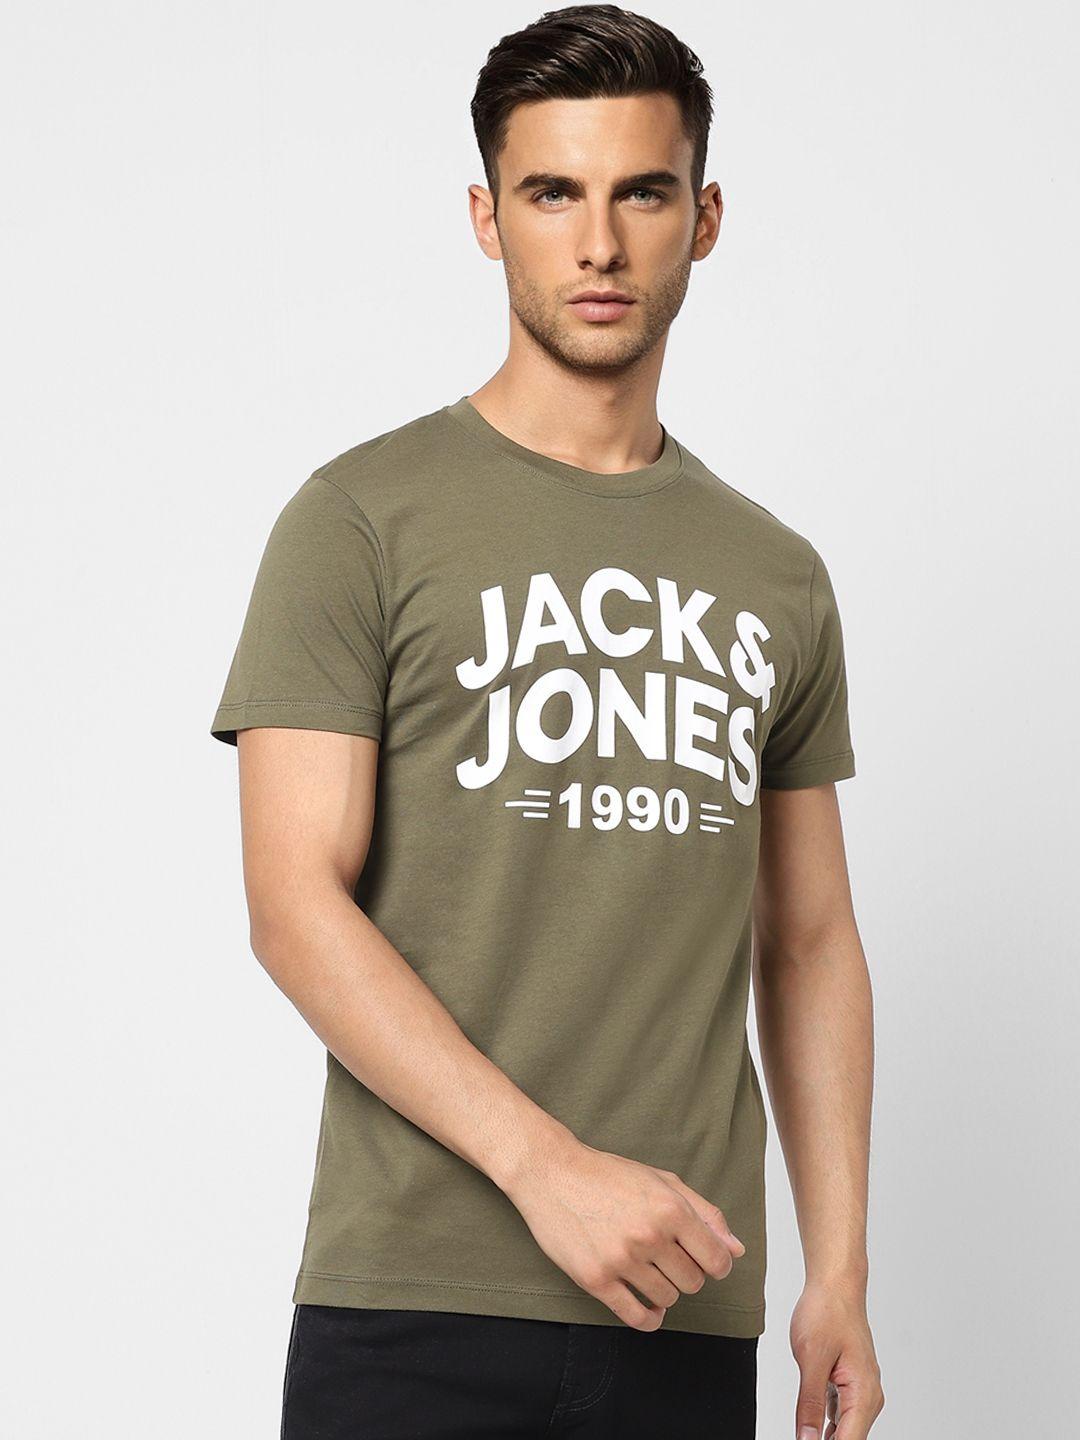 jack & jones men green & white brand logo printed pure cotton slim fit t-shirt